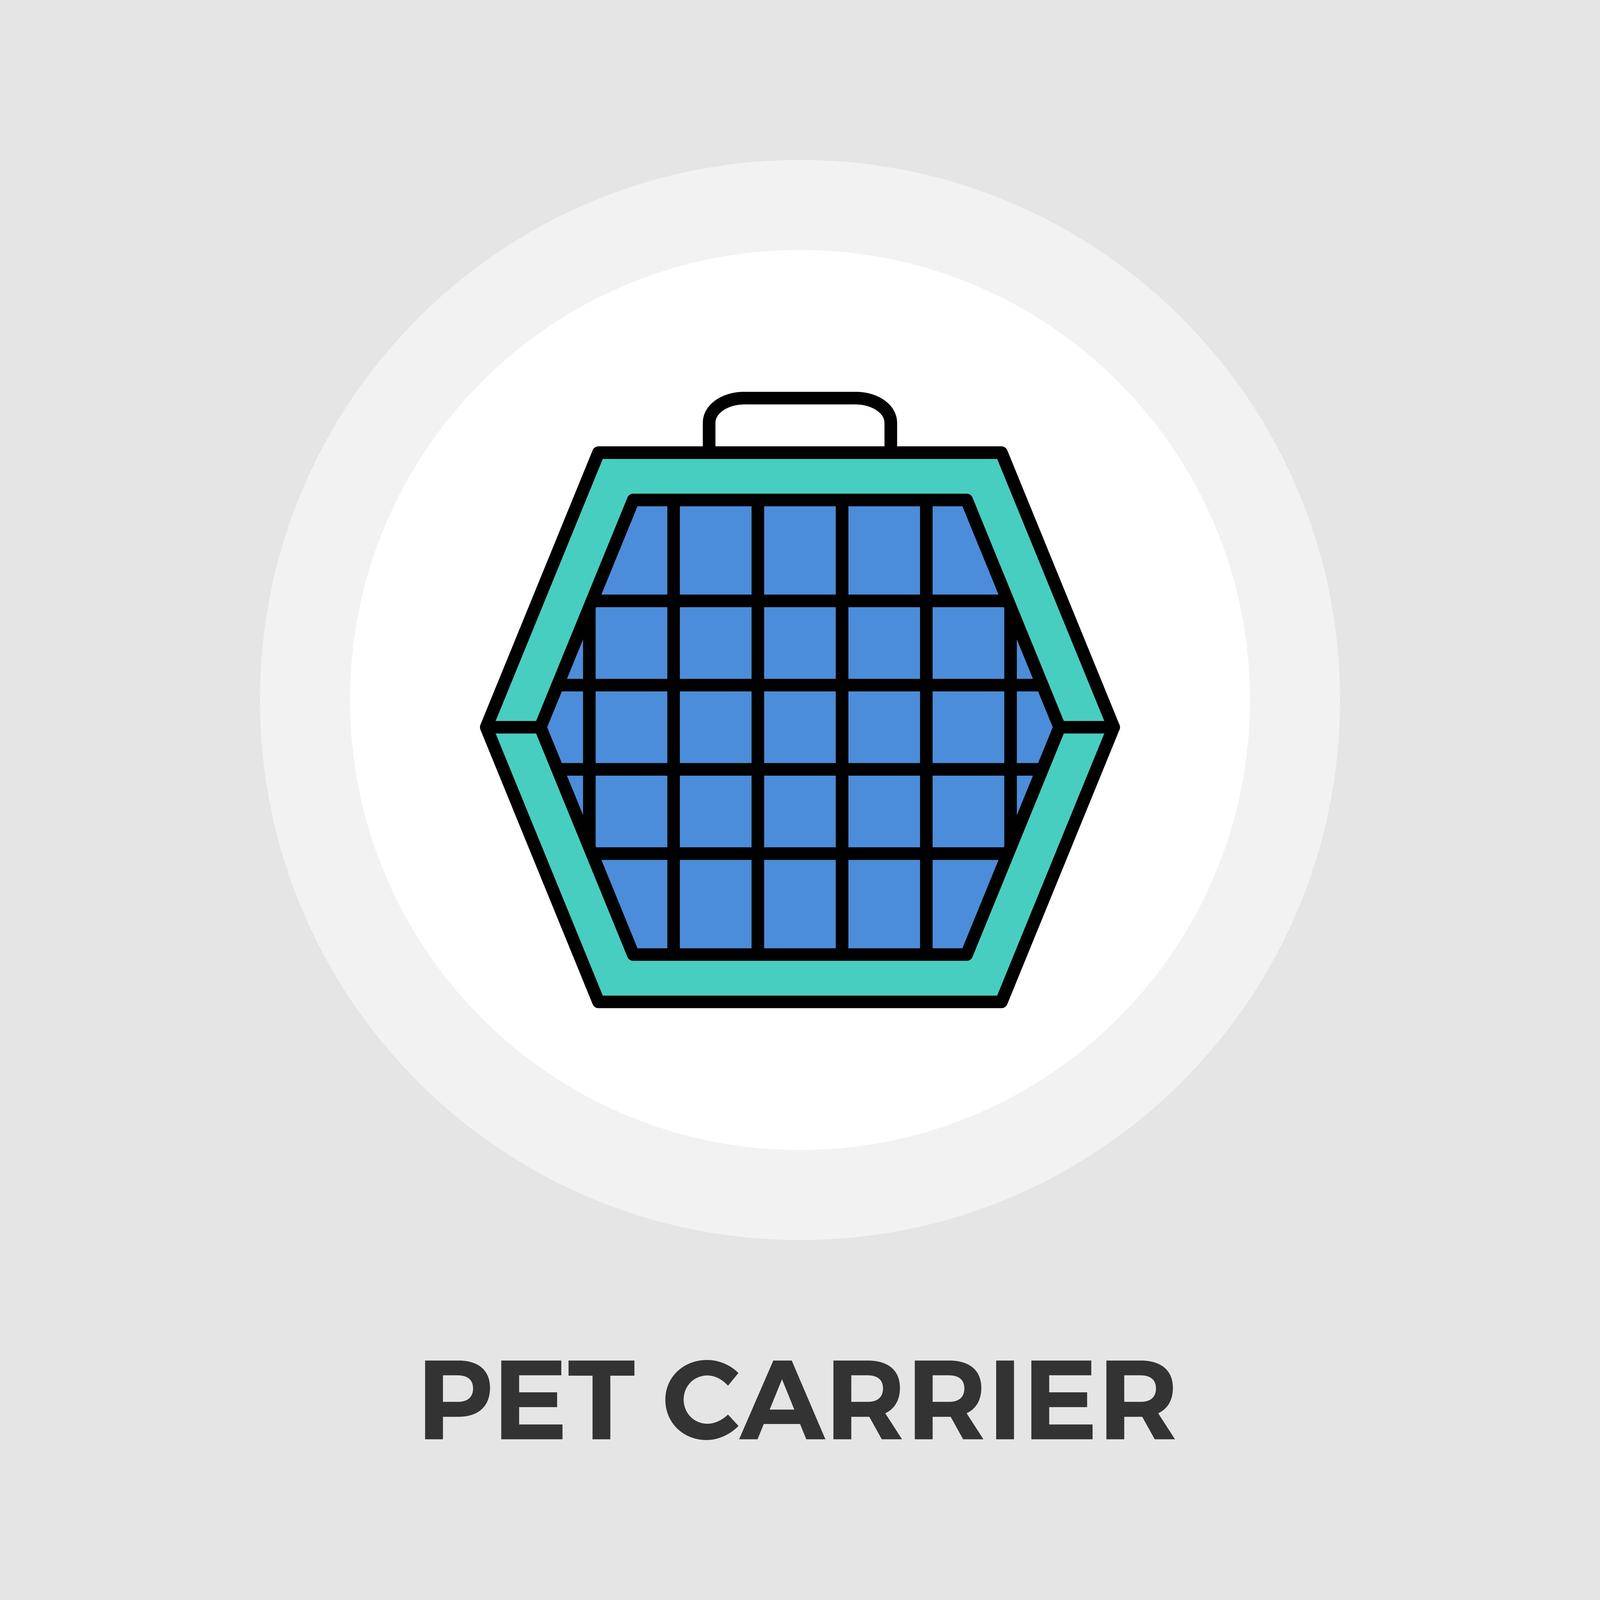 Pet Carrier Flat Icon by smoki